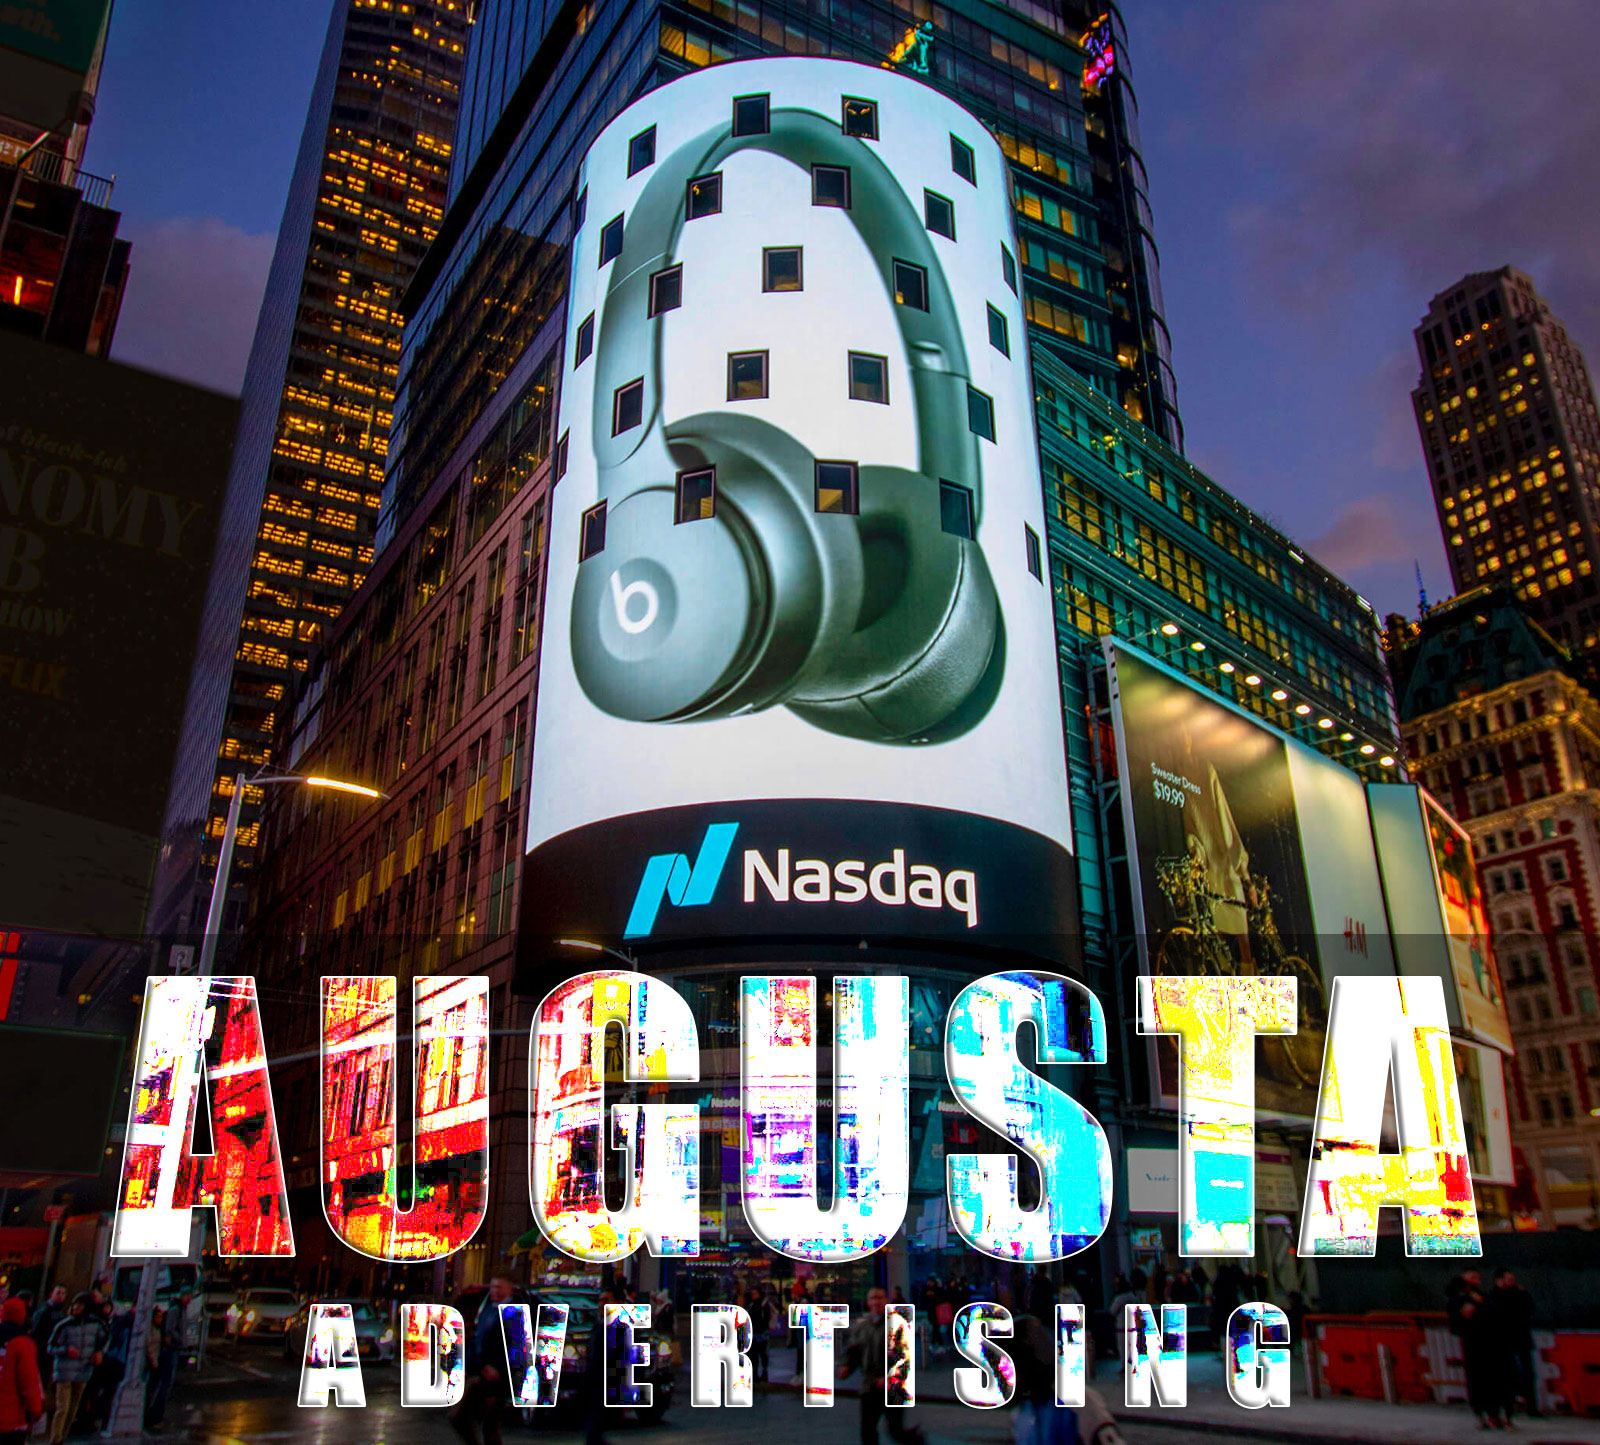 Augusta Advertising